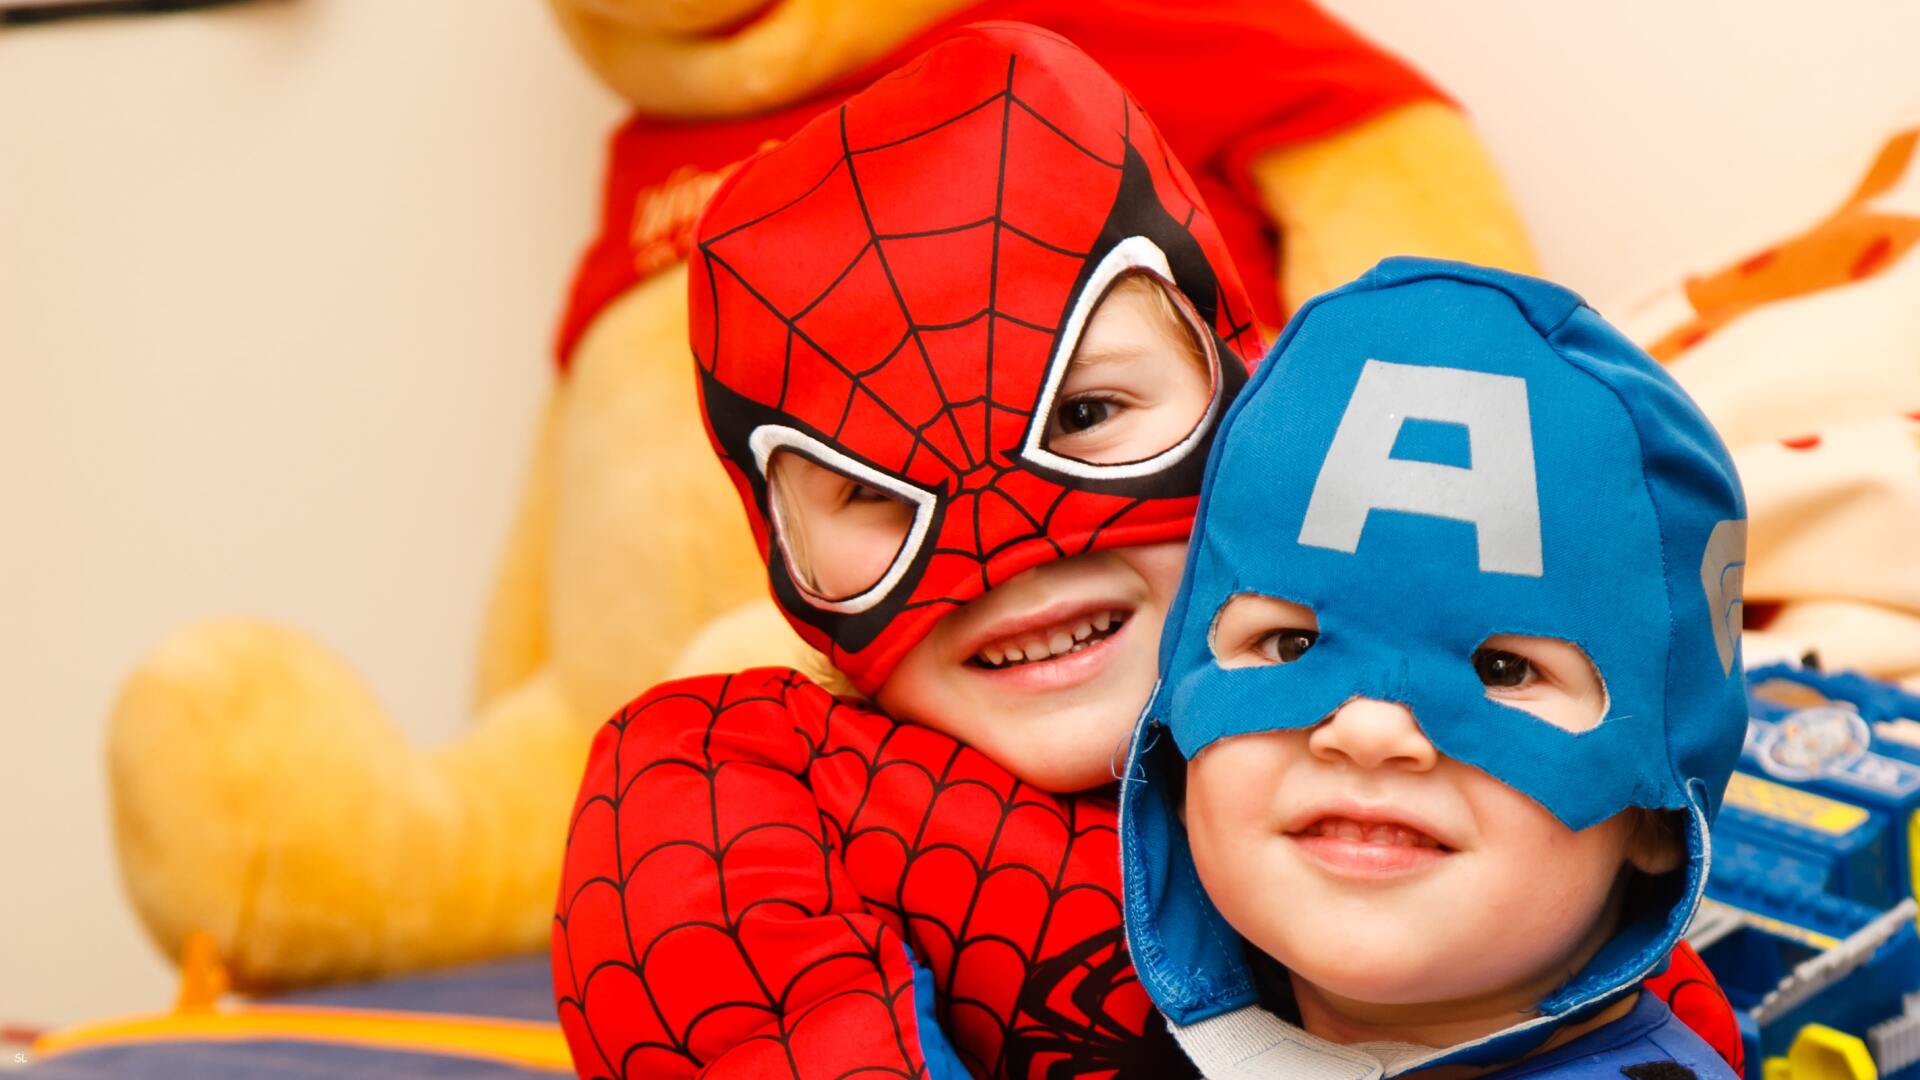 children's dressed as superheroes